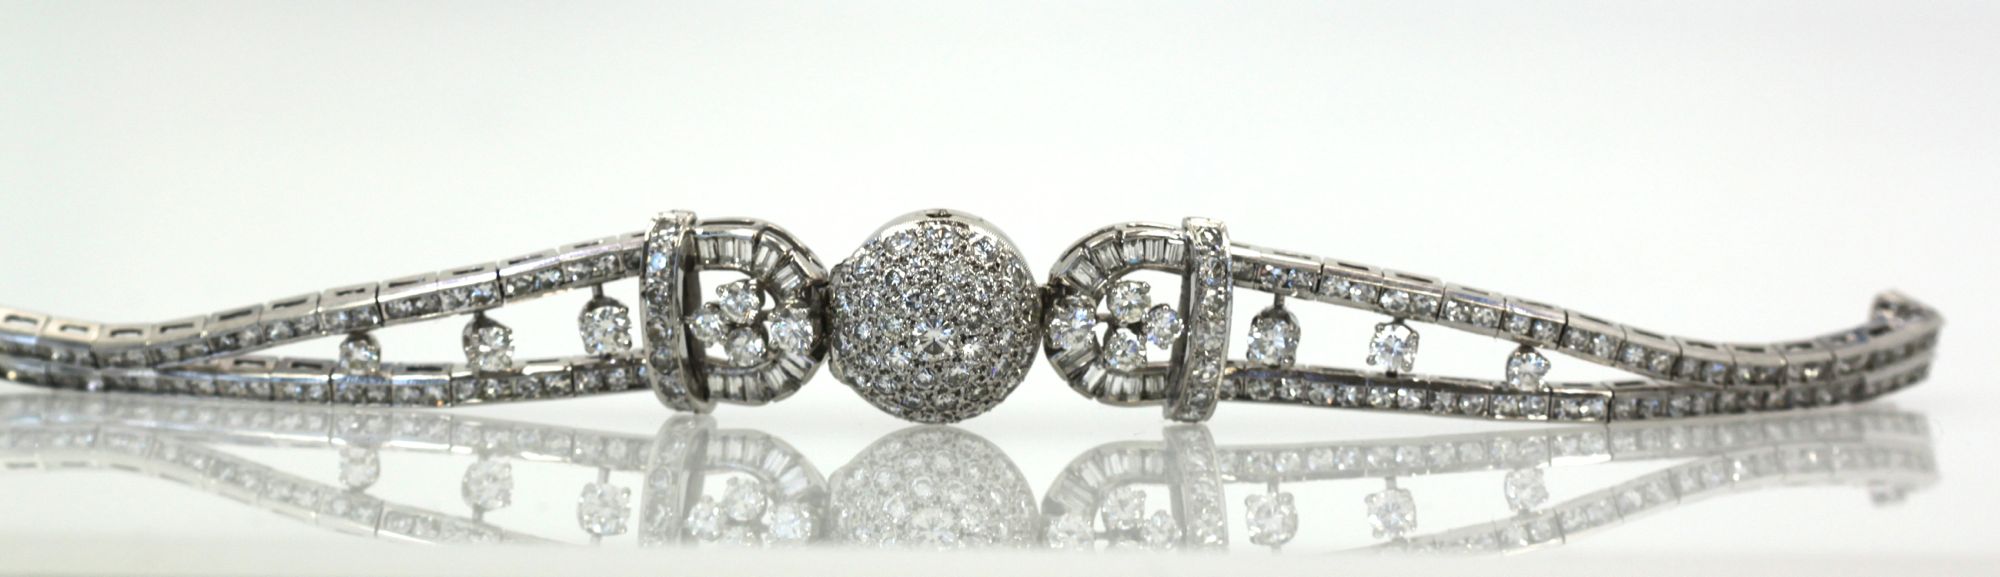 Longines Diamond Platinum Covered Dial Watch 7.25 Carats Of Diamonds Vs G-H 17 Jewels closed